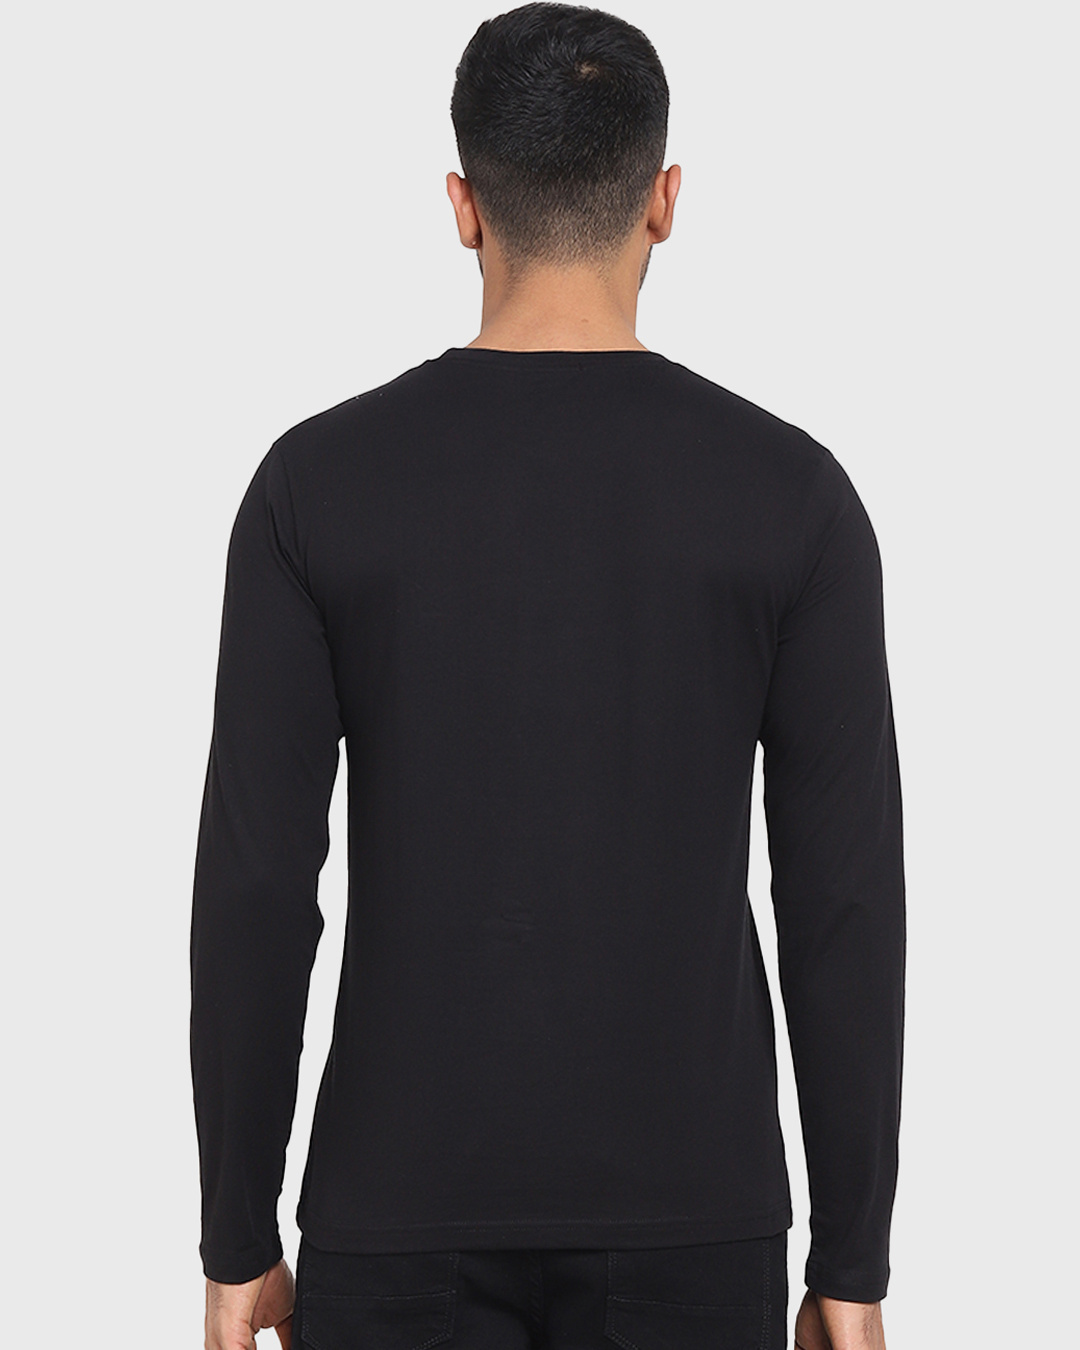 Shop Alpha Full Sleeve T-Shirt Black-Back